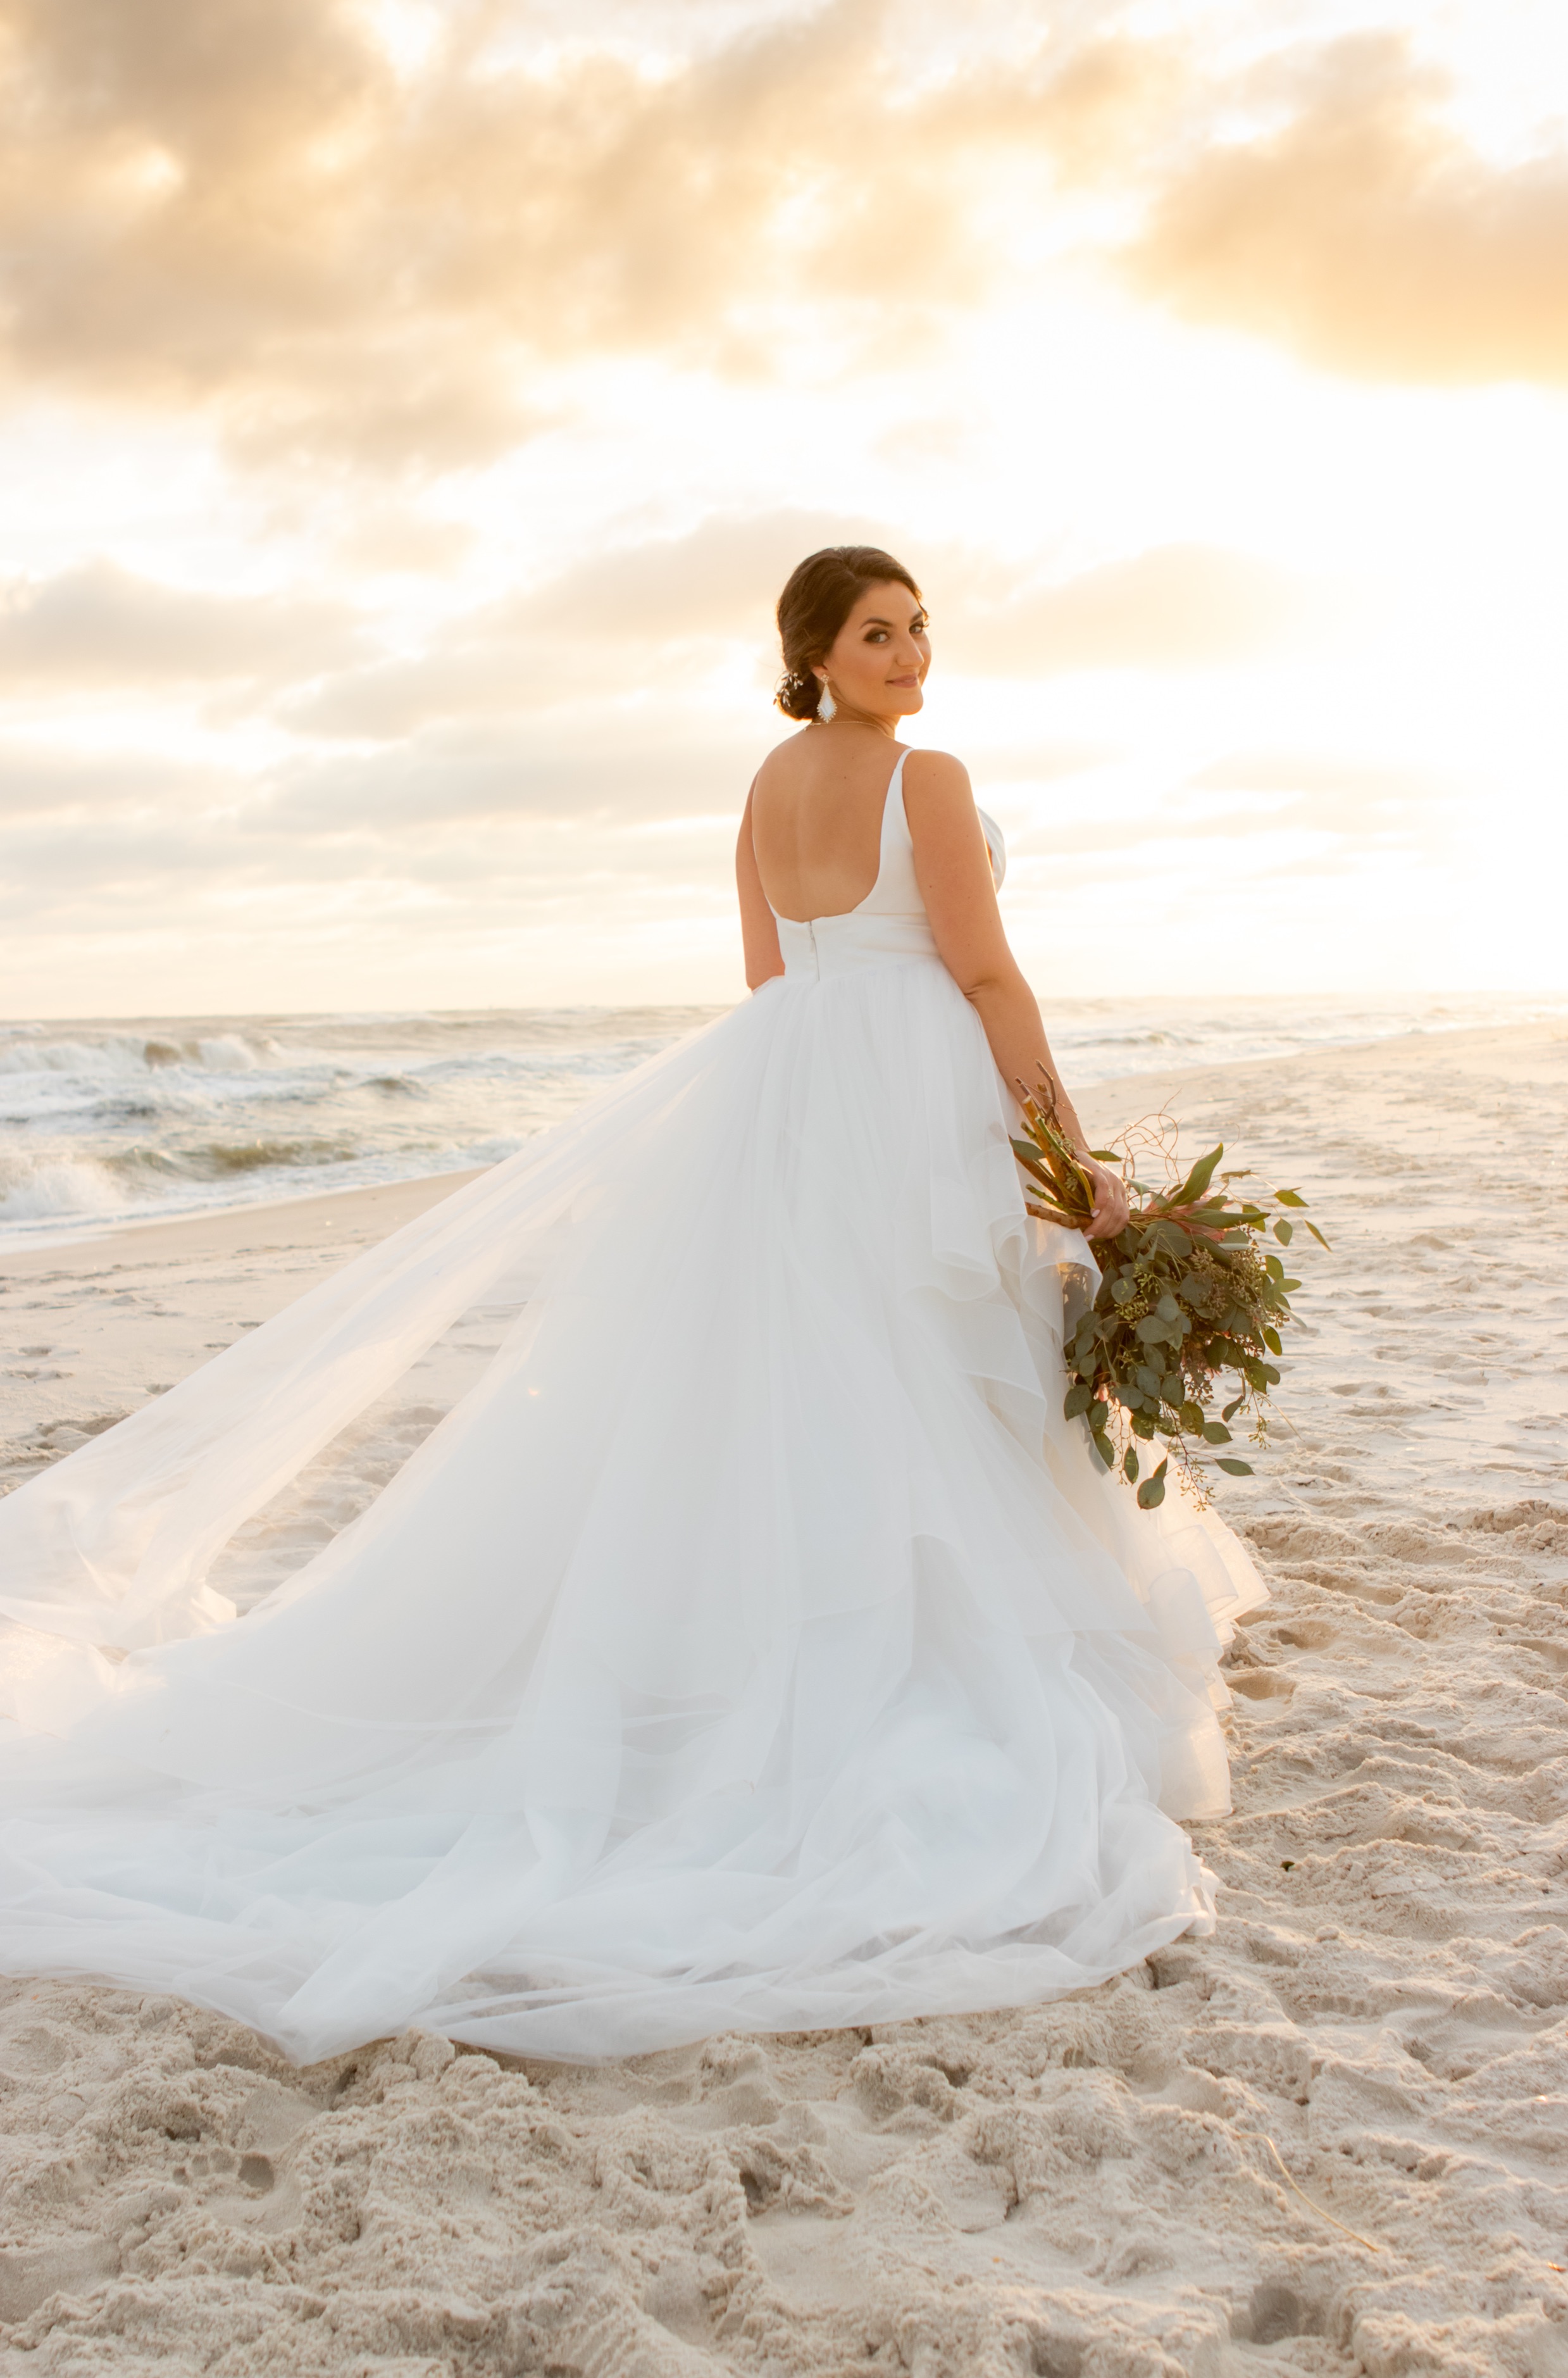 Book Your Gulf Shores or Orange Beach Wedding Now